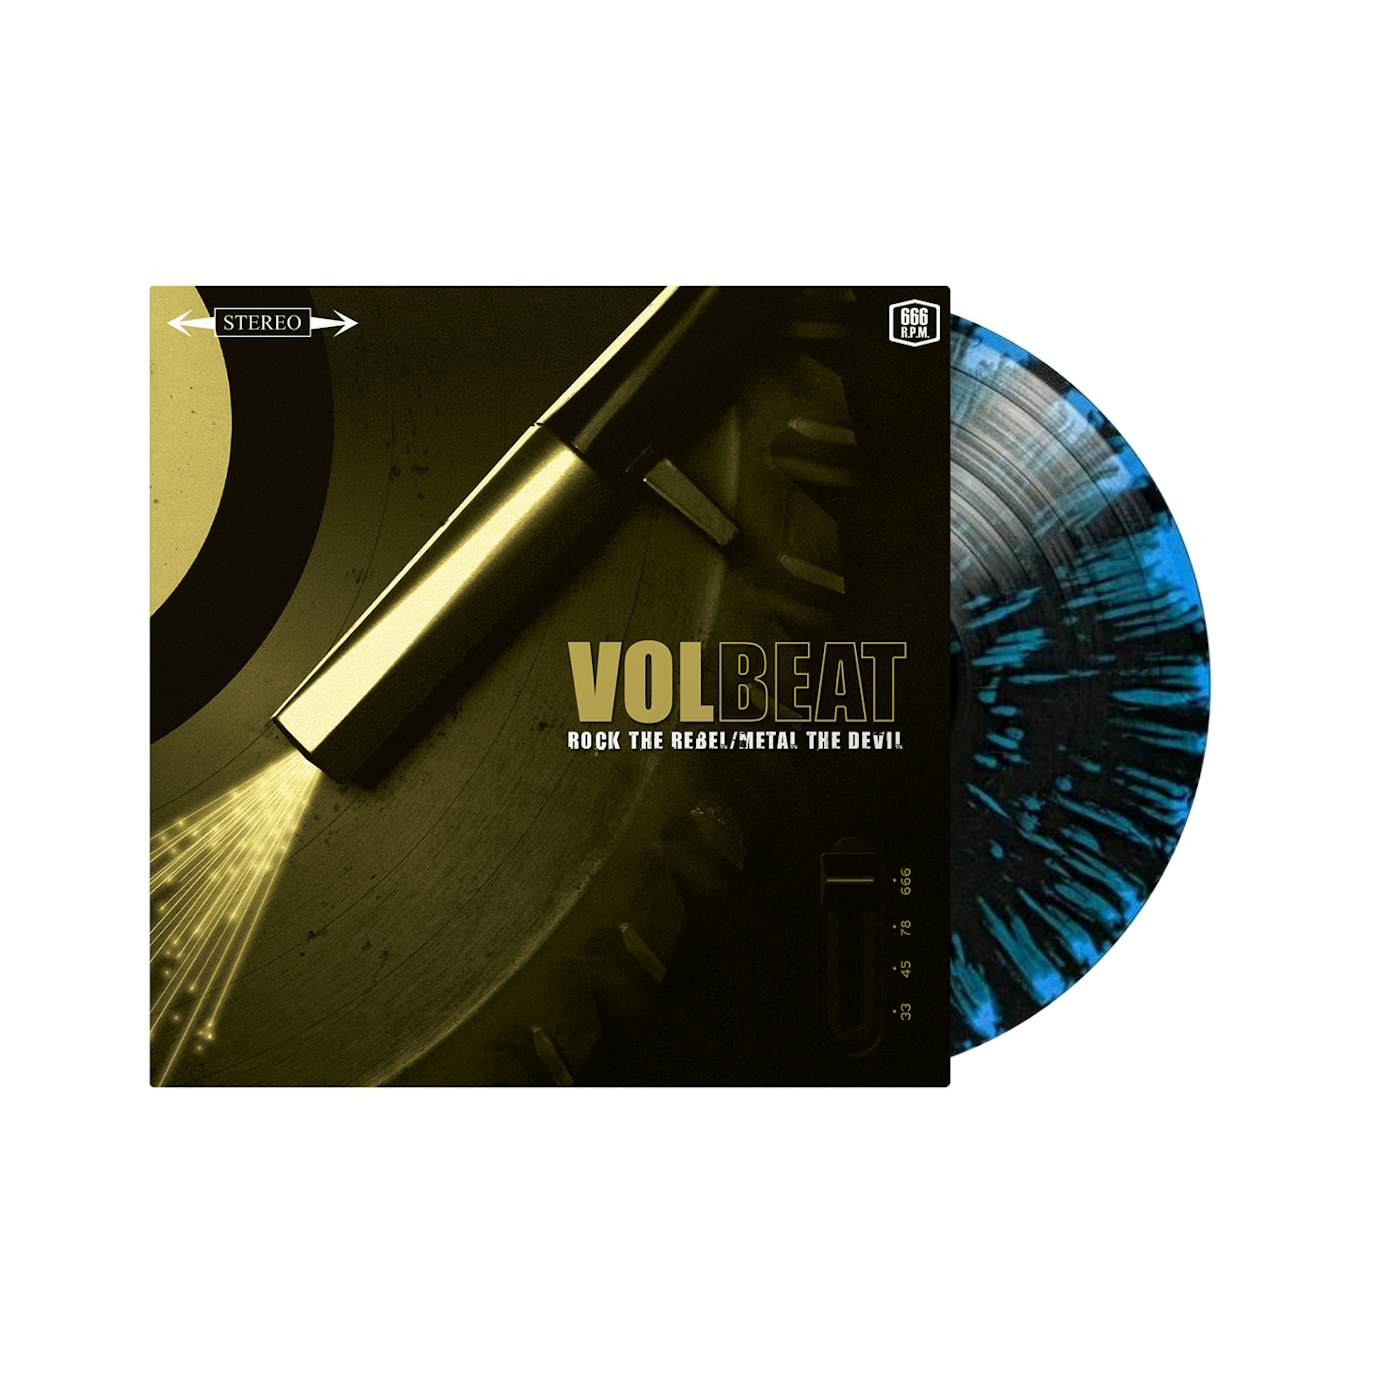 Volbeat 15th Anniversary Limited Vinyl Re-Issue Rock The Rebel/Metal The Devil - Blue Black Splatter Vinyl